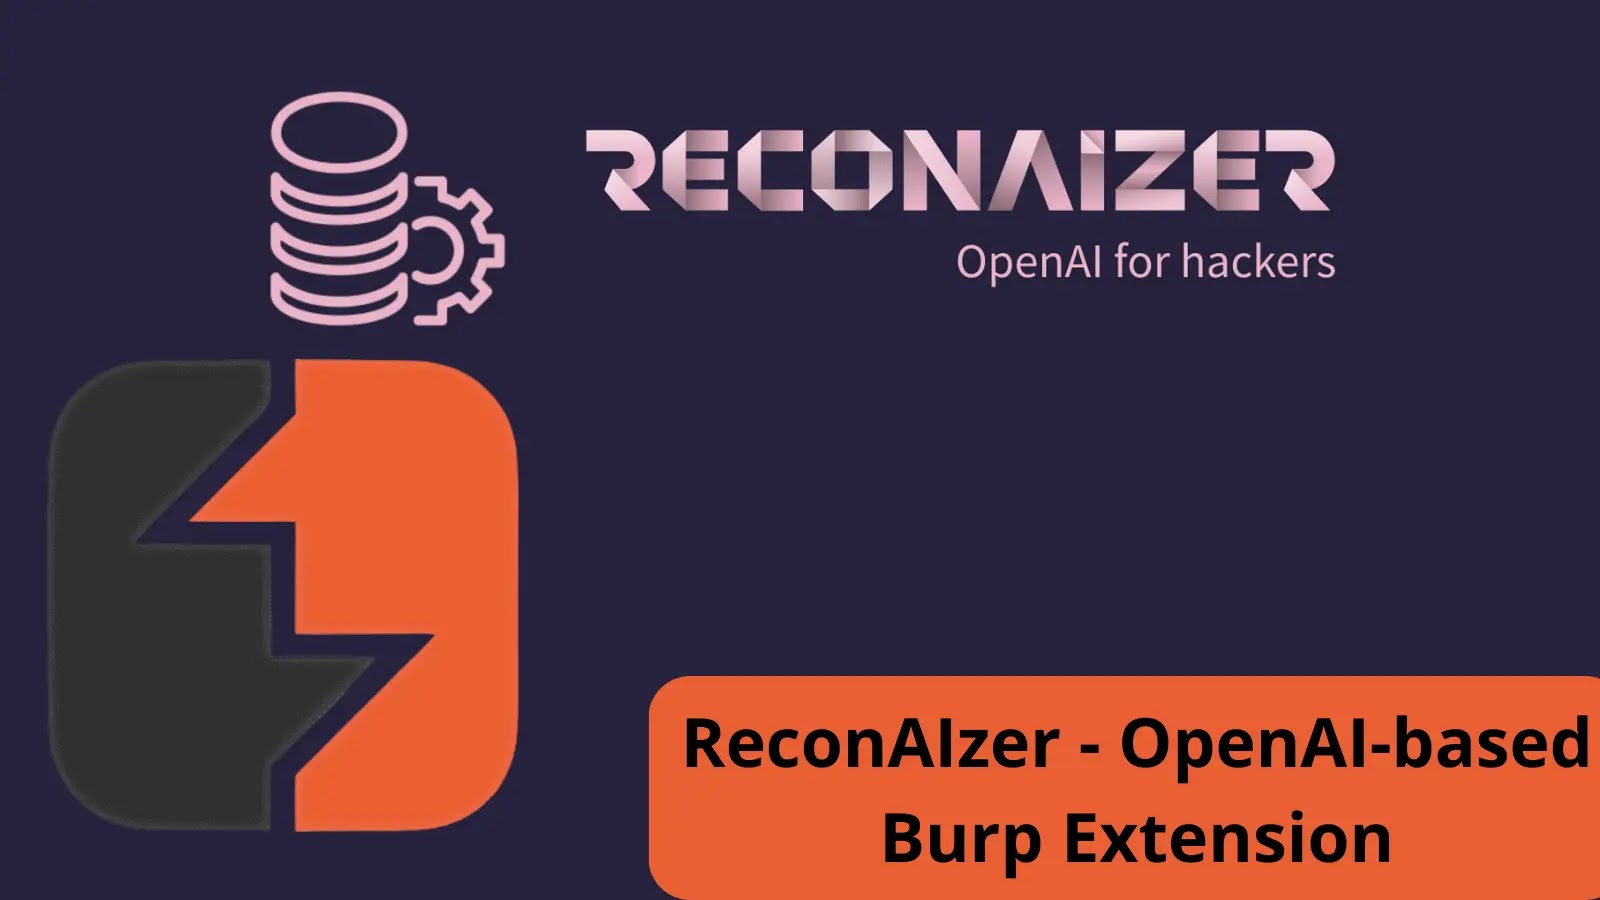 ReconAIzer Burp Extension